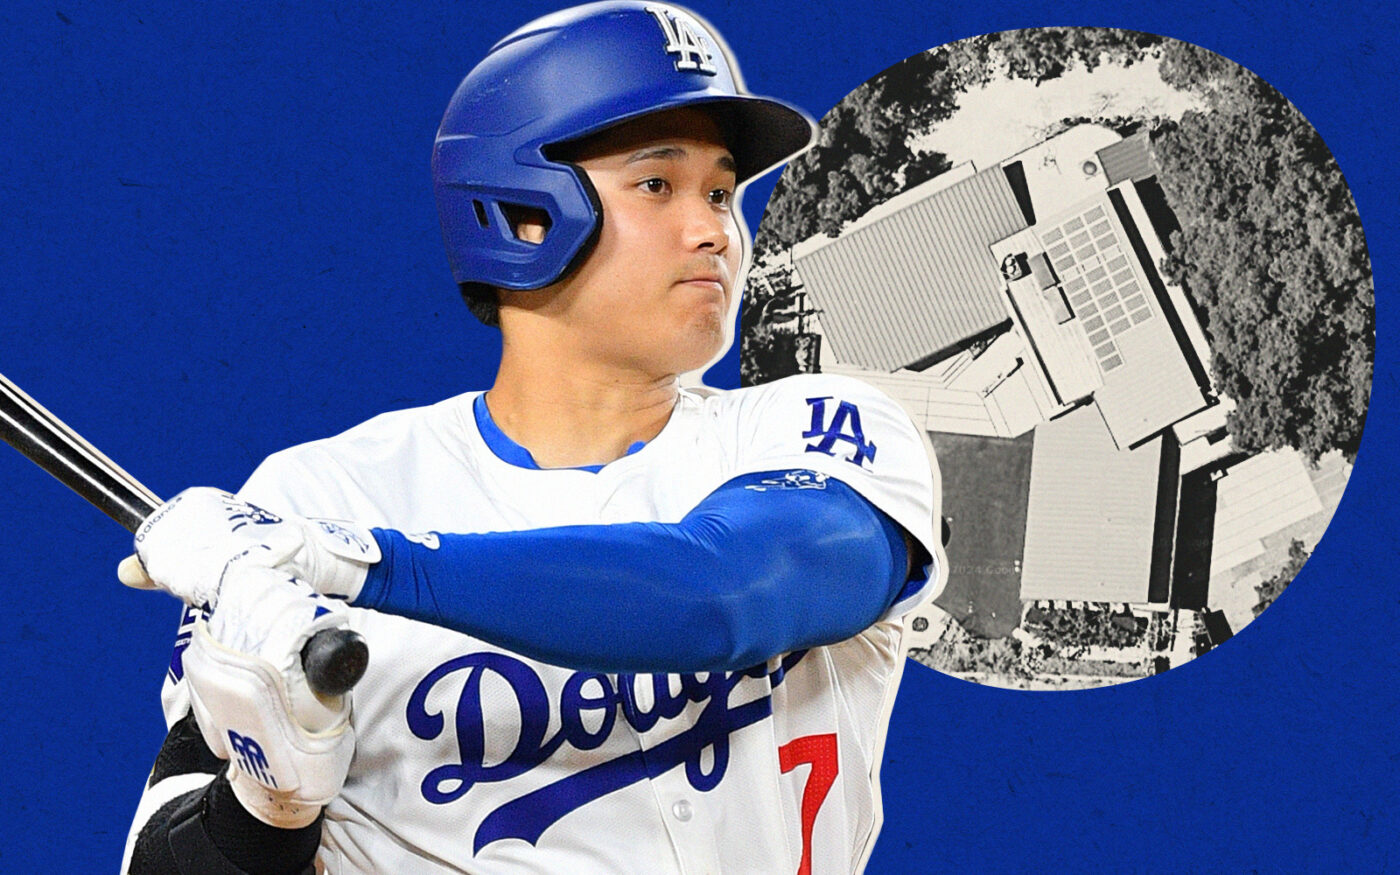 Dodgers Star Ohtani Buys La Cañada Flintridge Home for $8M